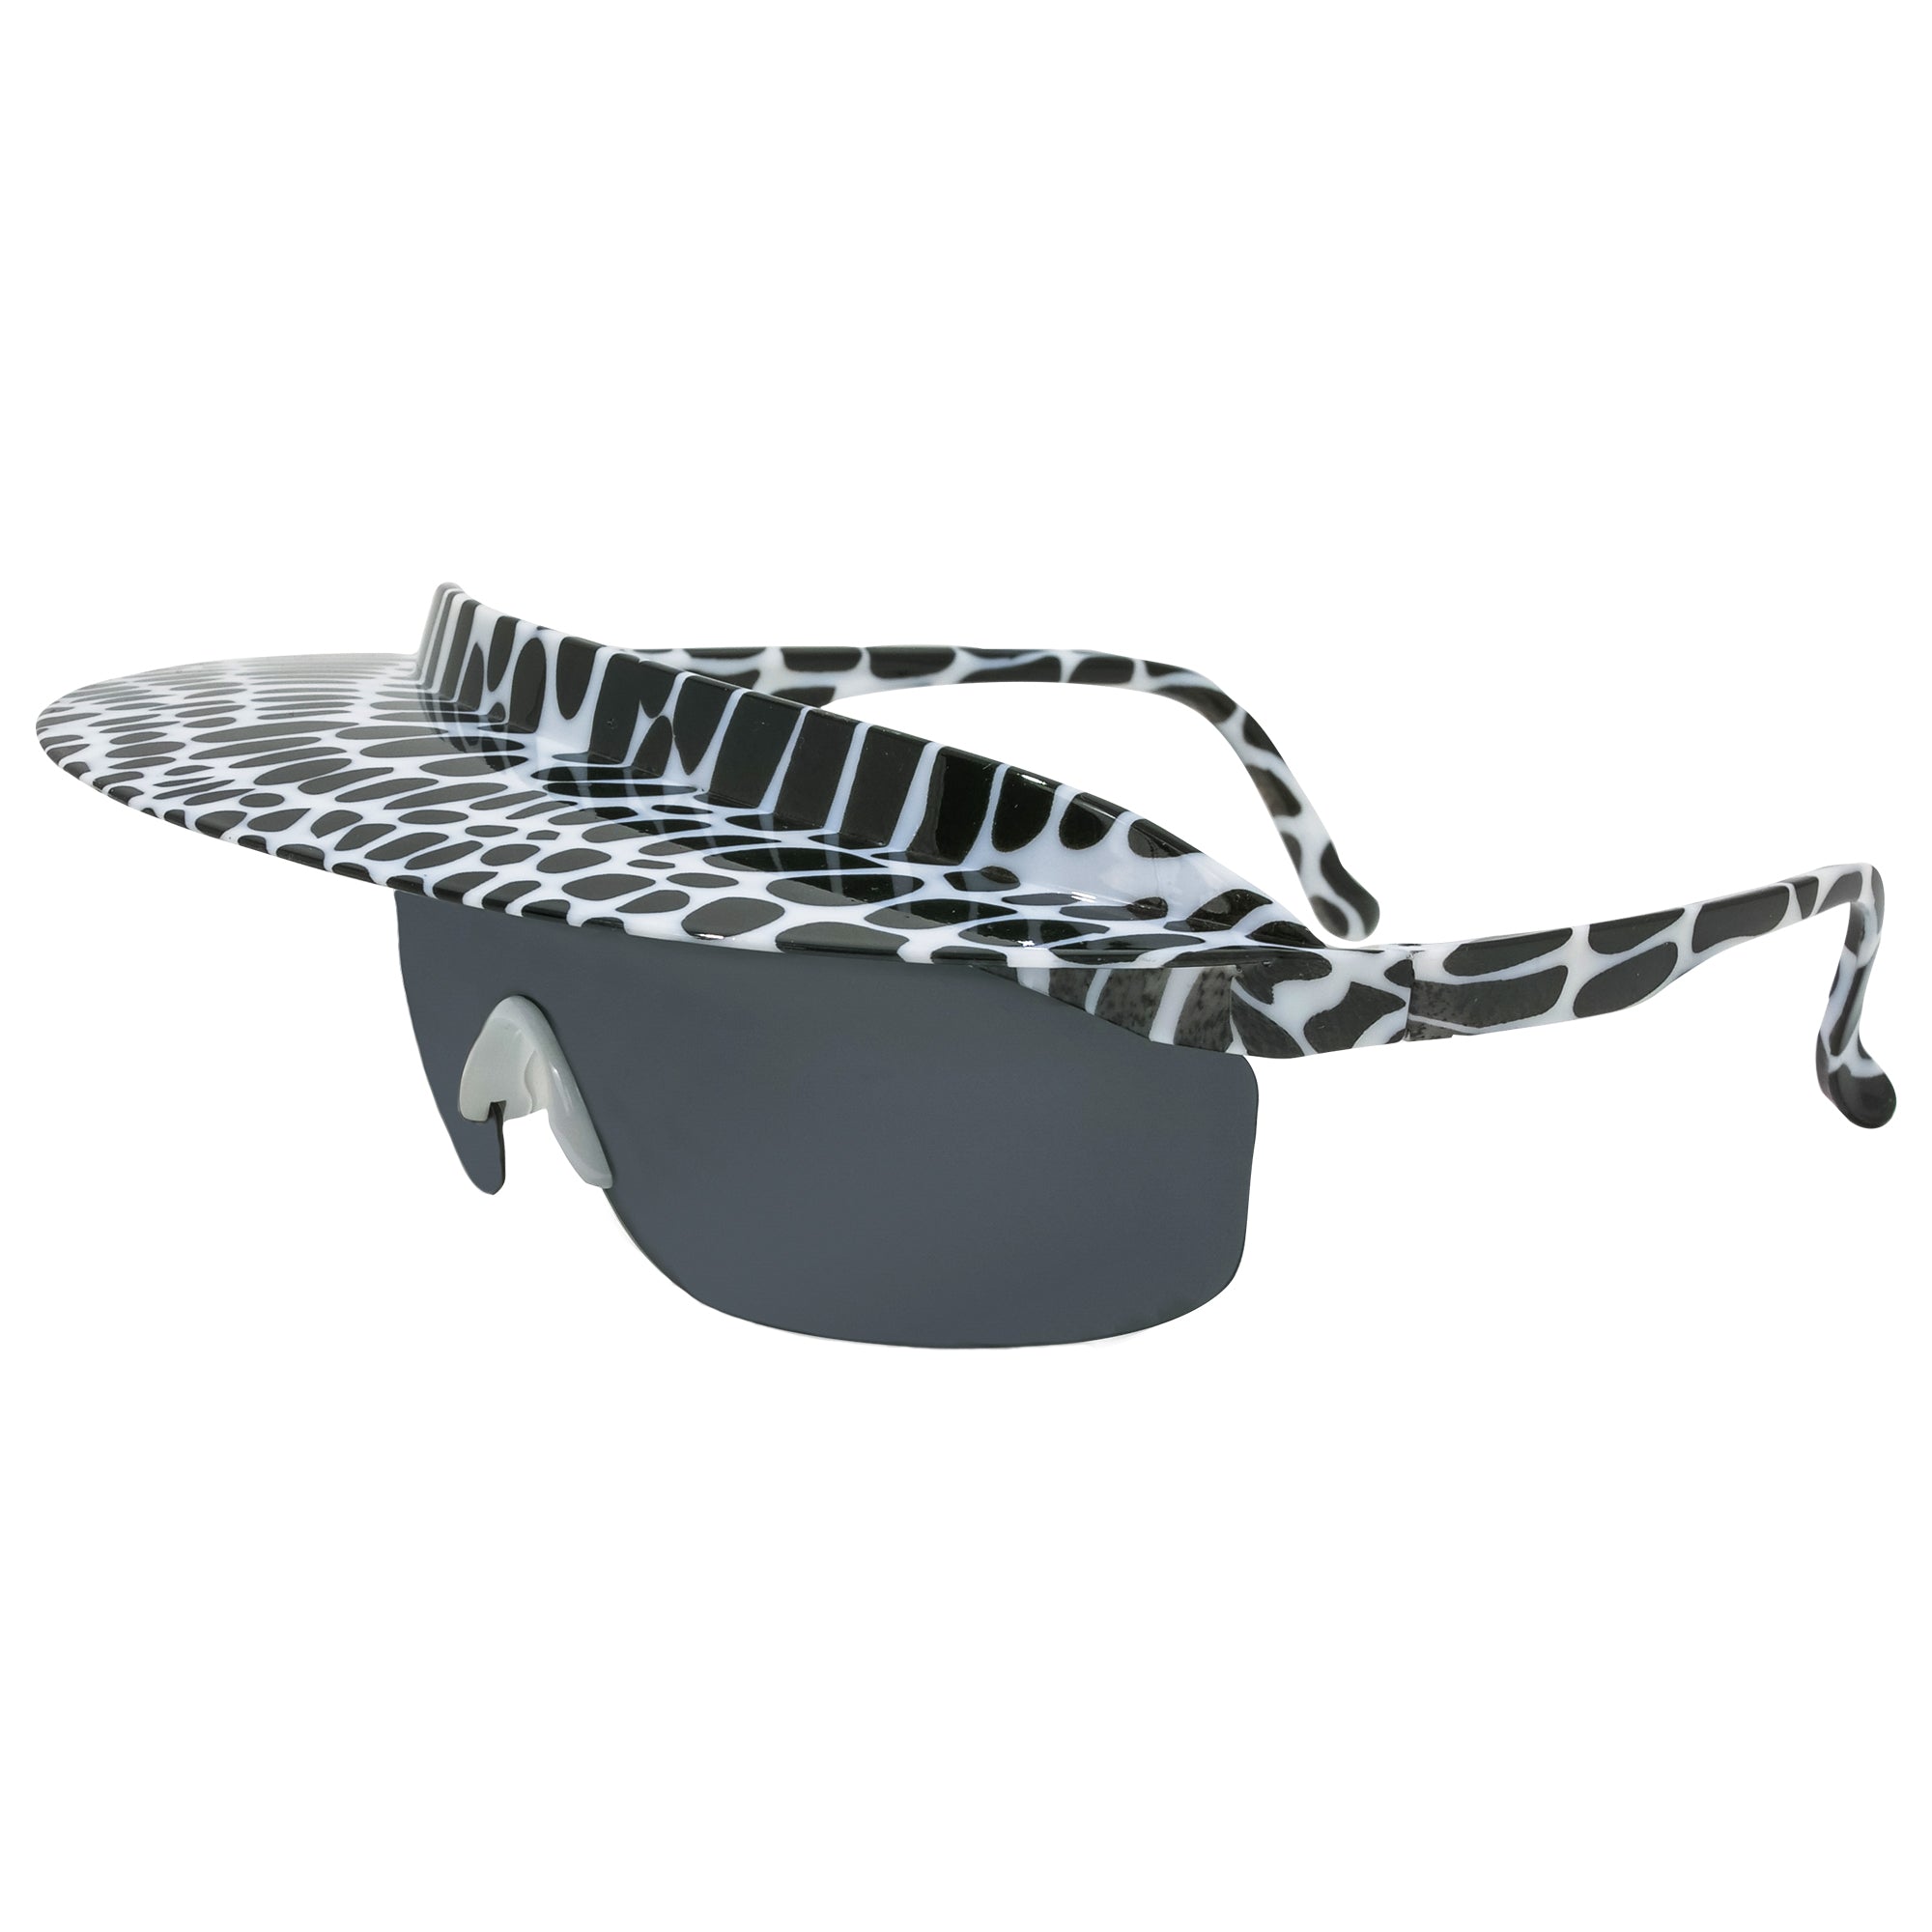 Retro 80s Great White Gator Vintage Visor Shades Sunglasses - Throwback white and black gator print design Visor Shade Polarized UV400 sunglasses. B Fresh Gear